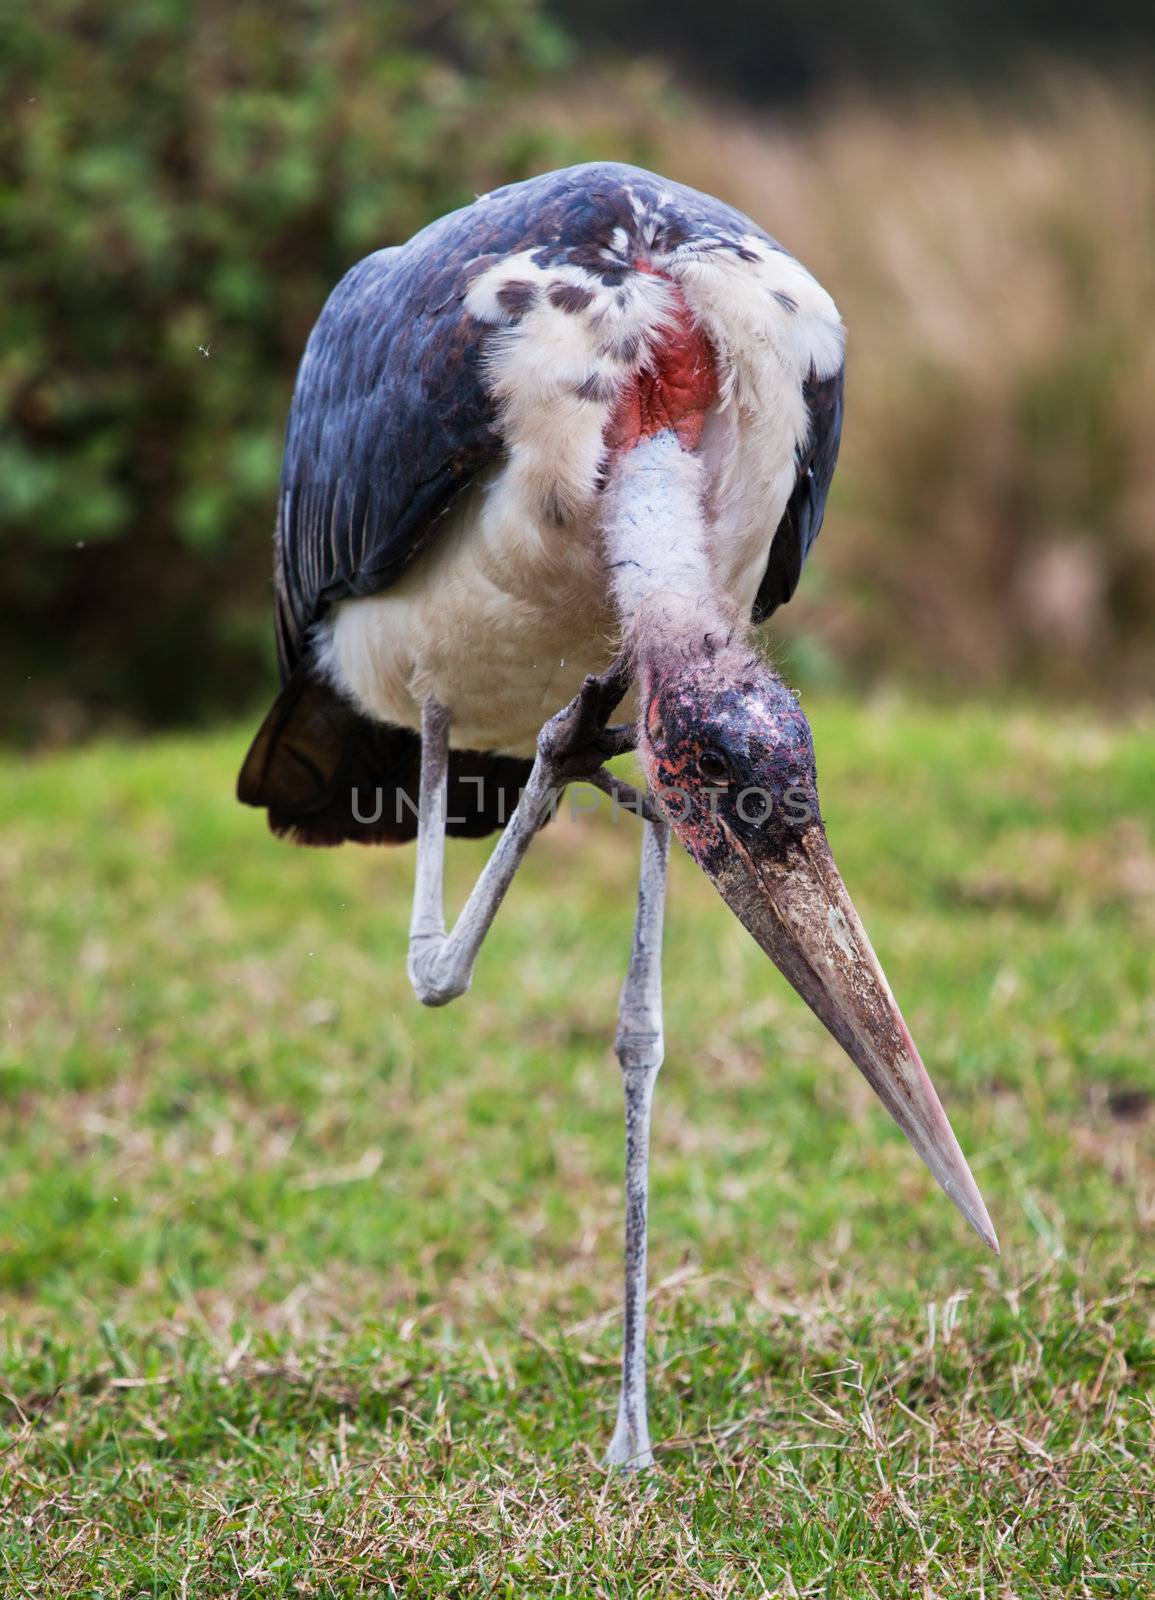 The Marabou Stork bird in Tanzania, Africa